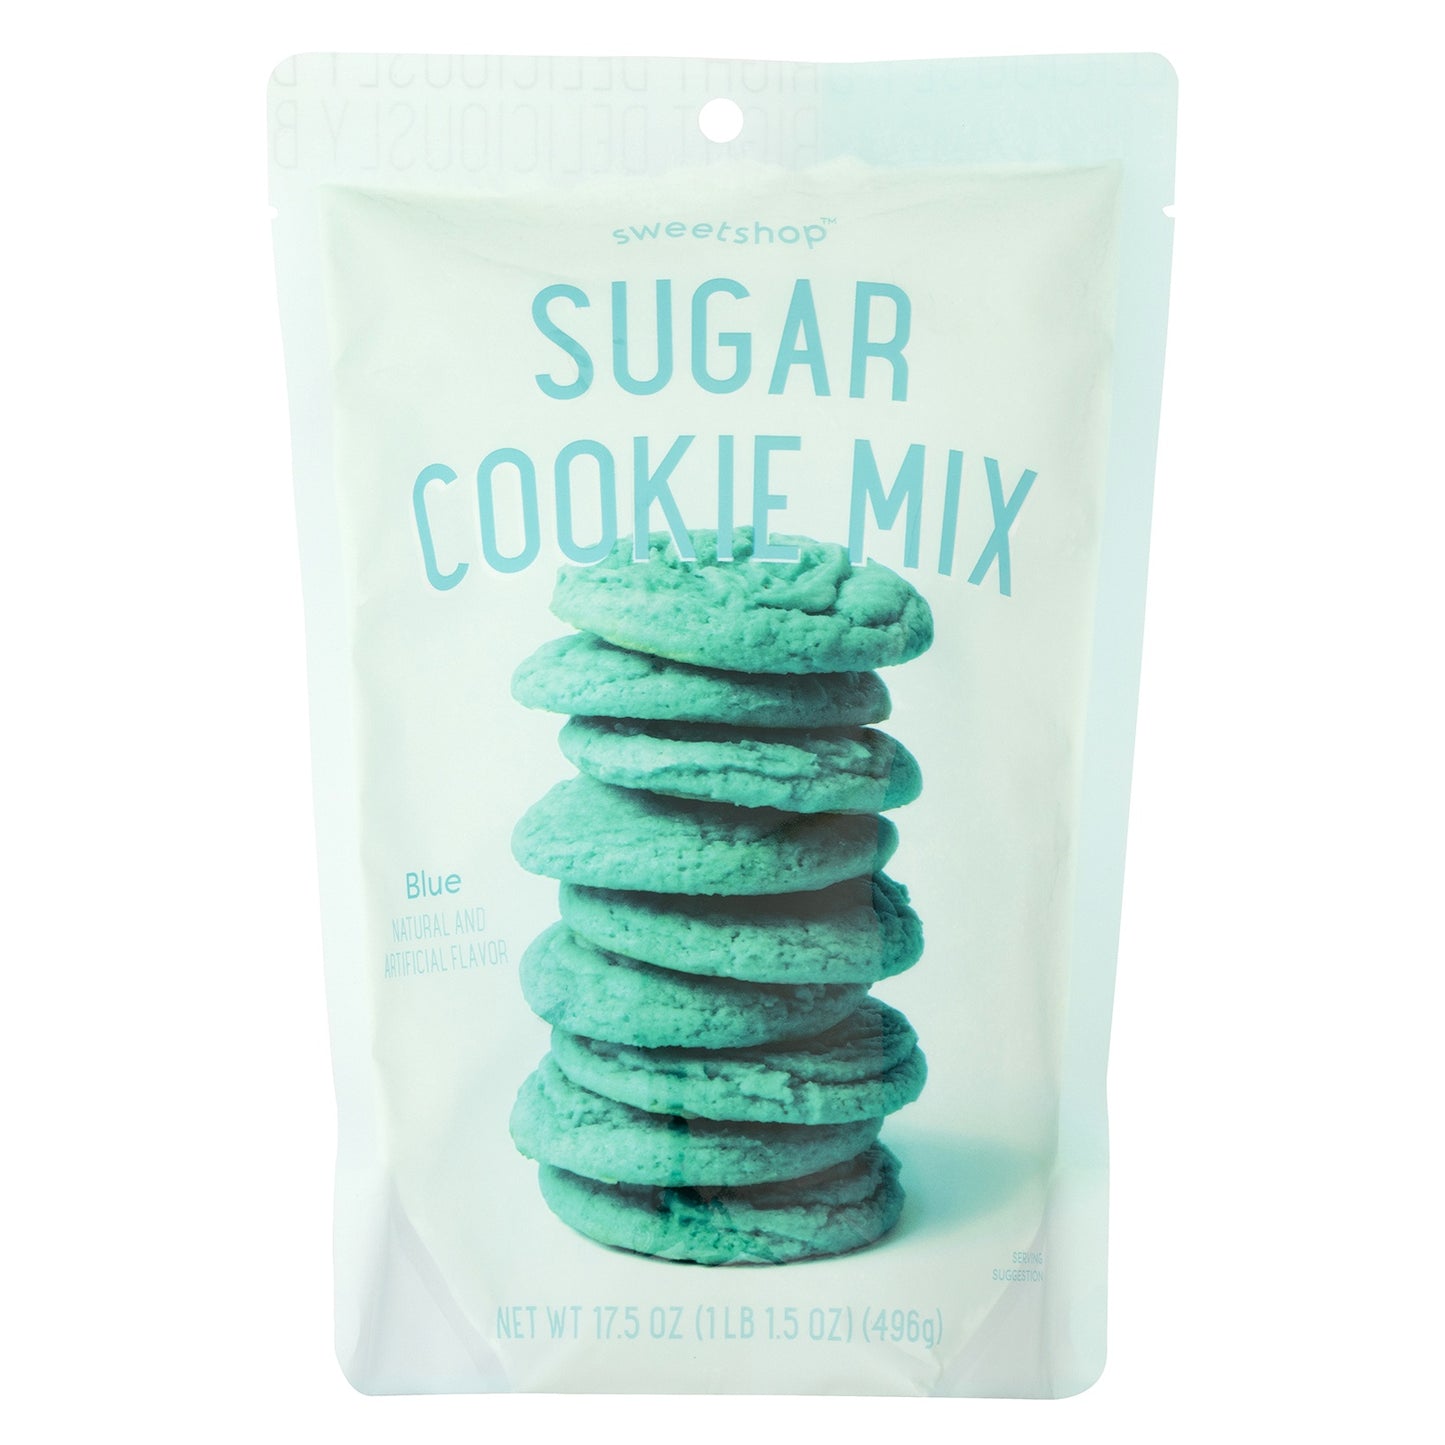 Sweetshop Sugar Cookie Mix 17.5oz-Blue